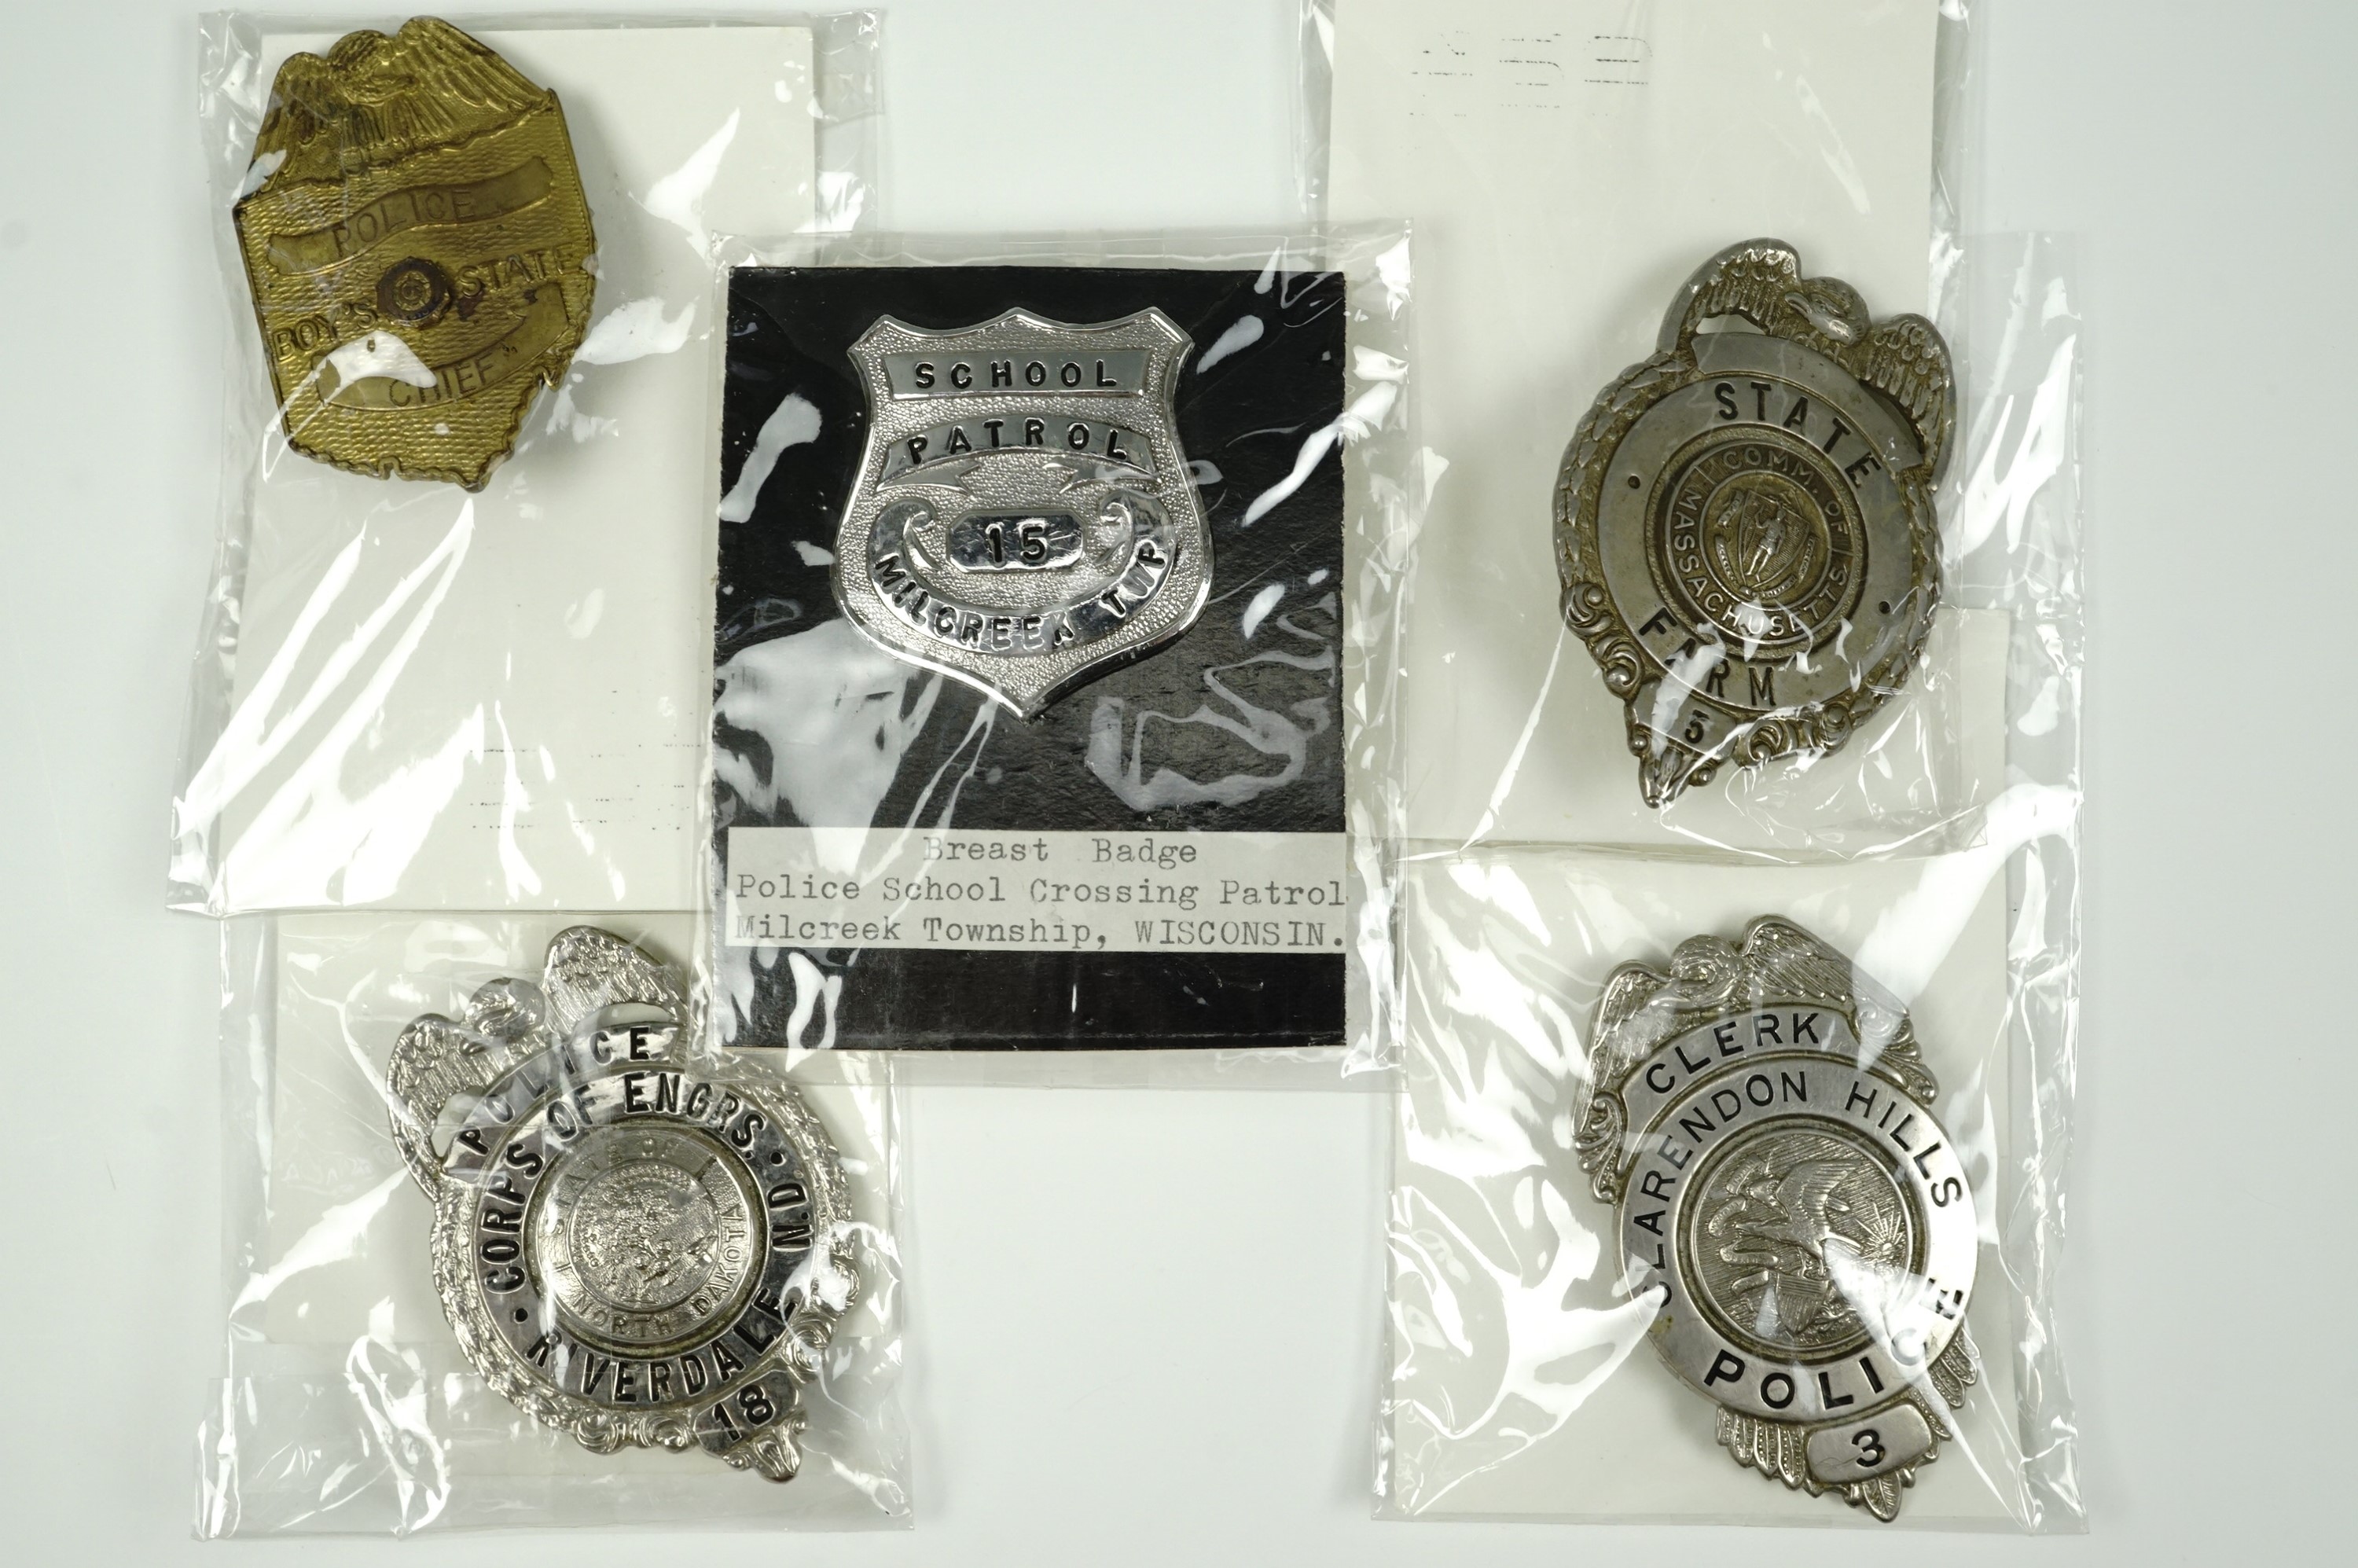 Five American police breast badges, comprising Massachusetts State Farm prison, Illinois clerk's